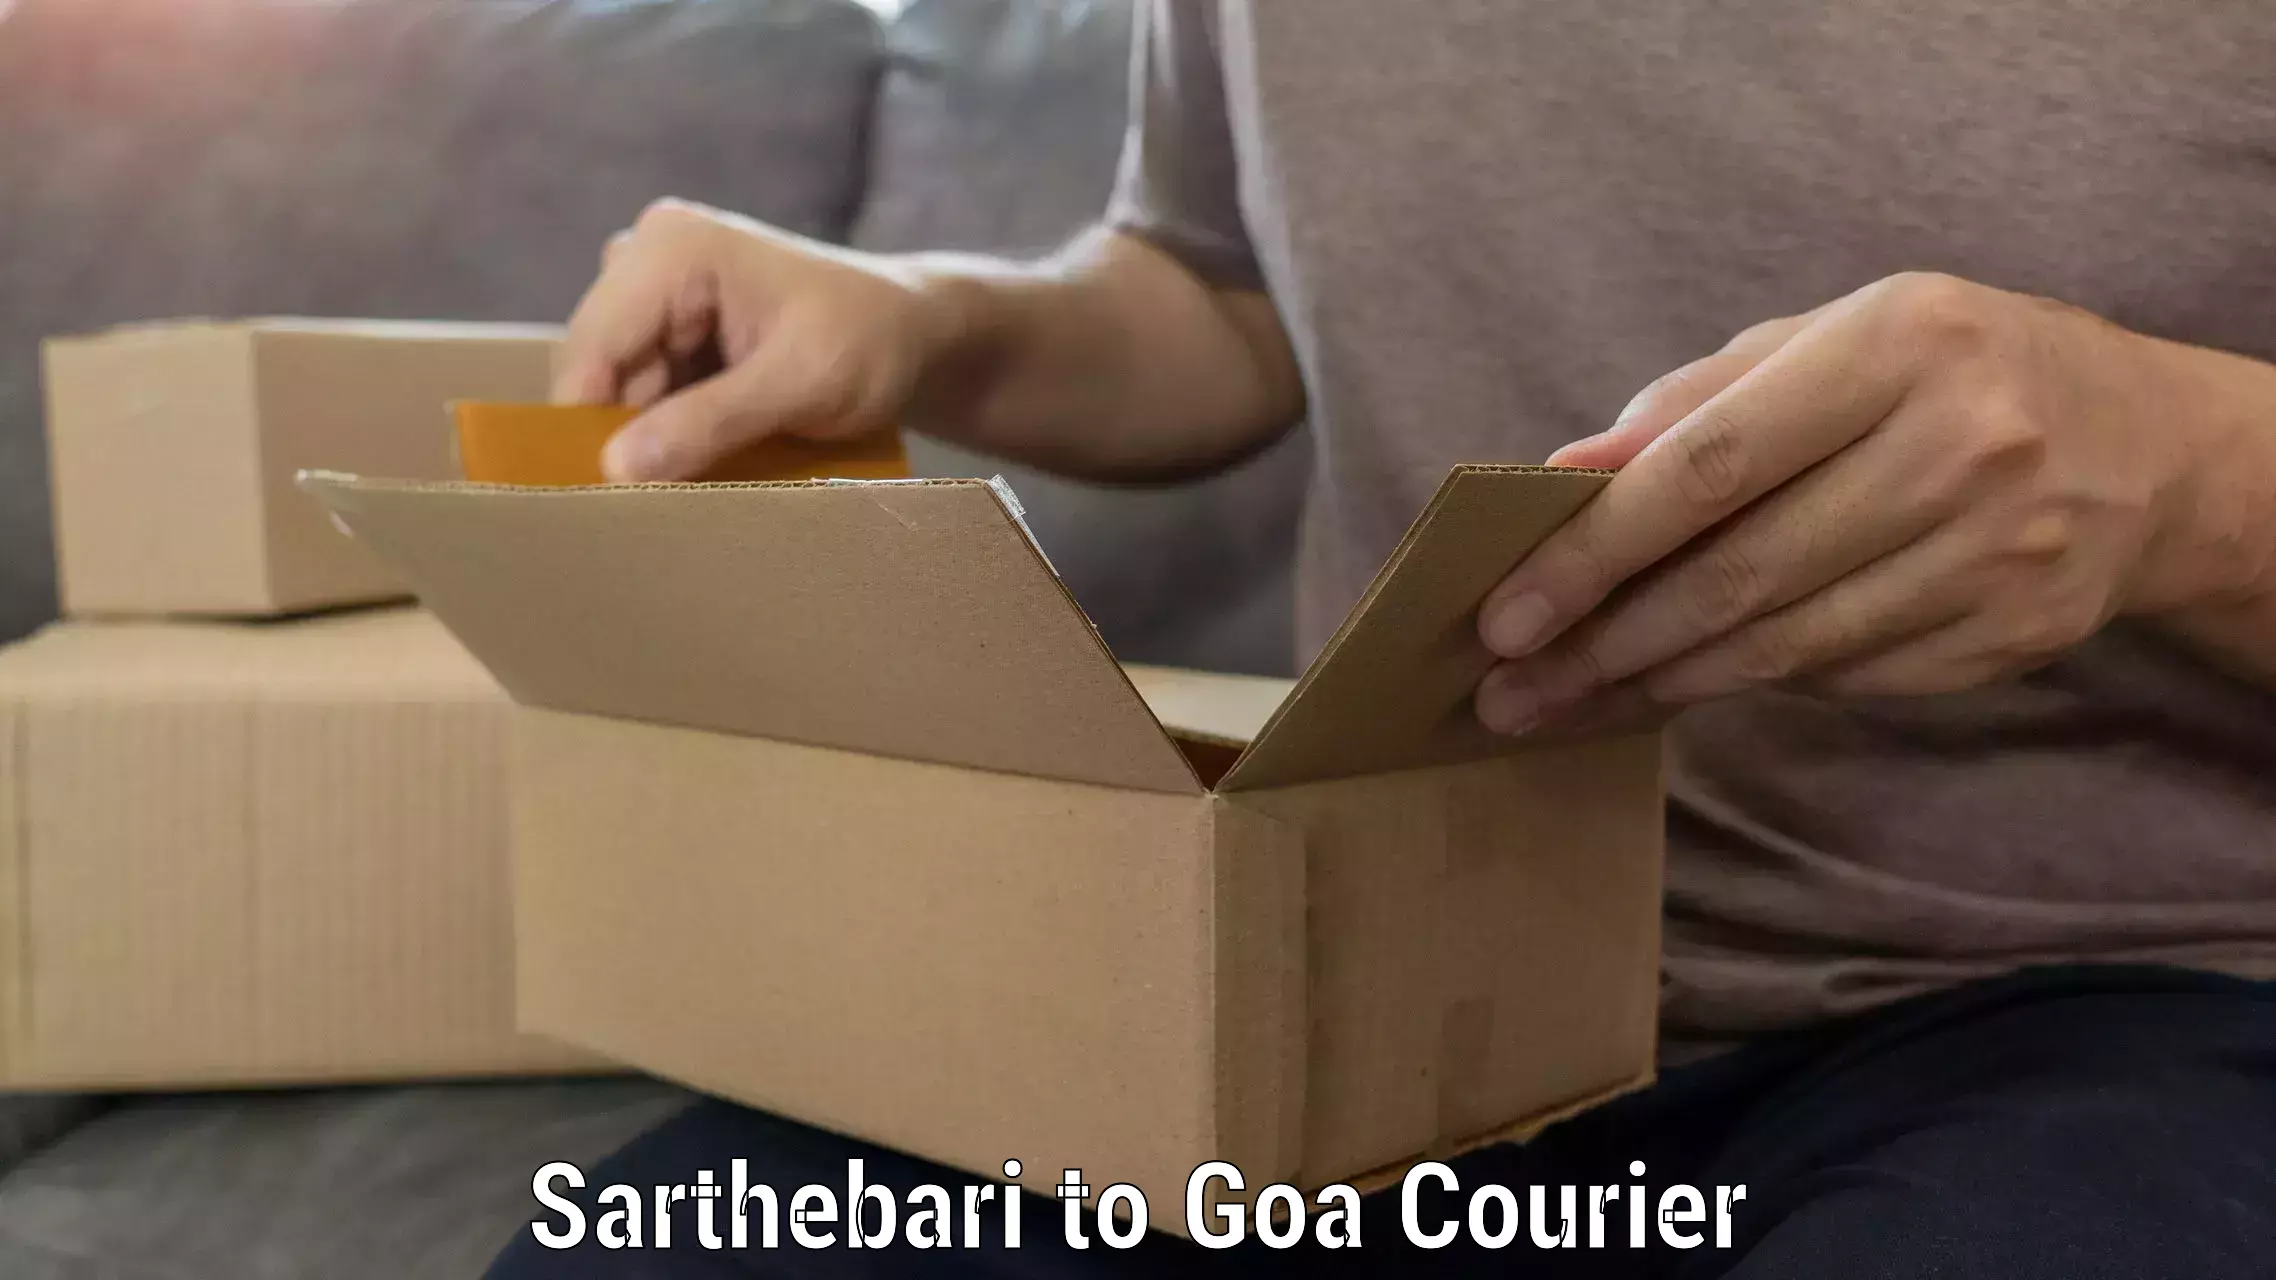 Professional moving company Sarthebari to Goa